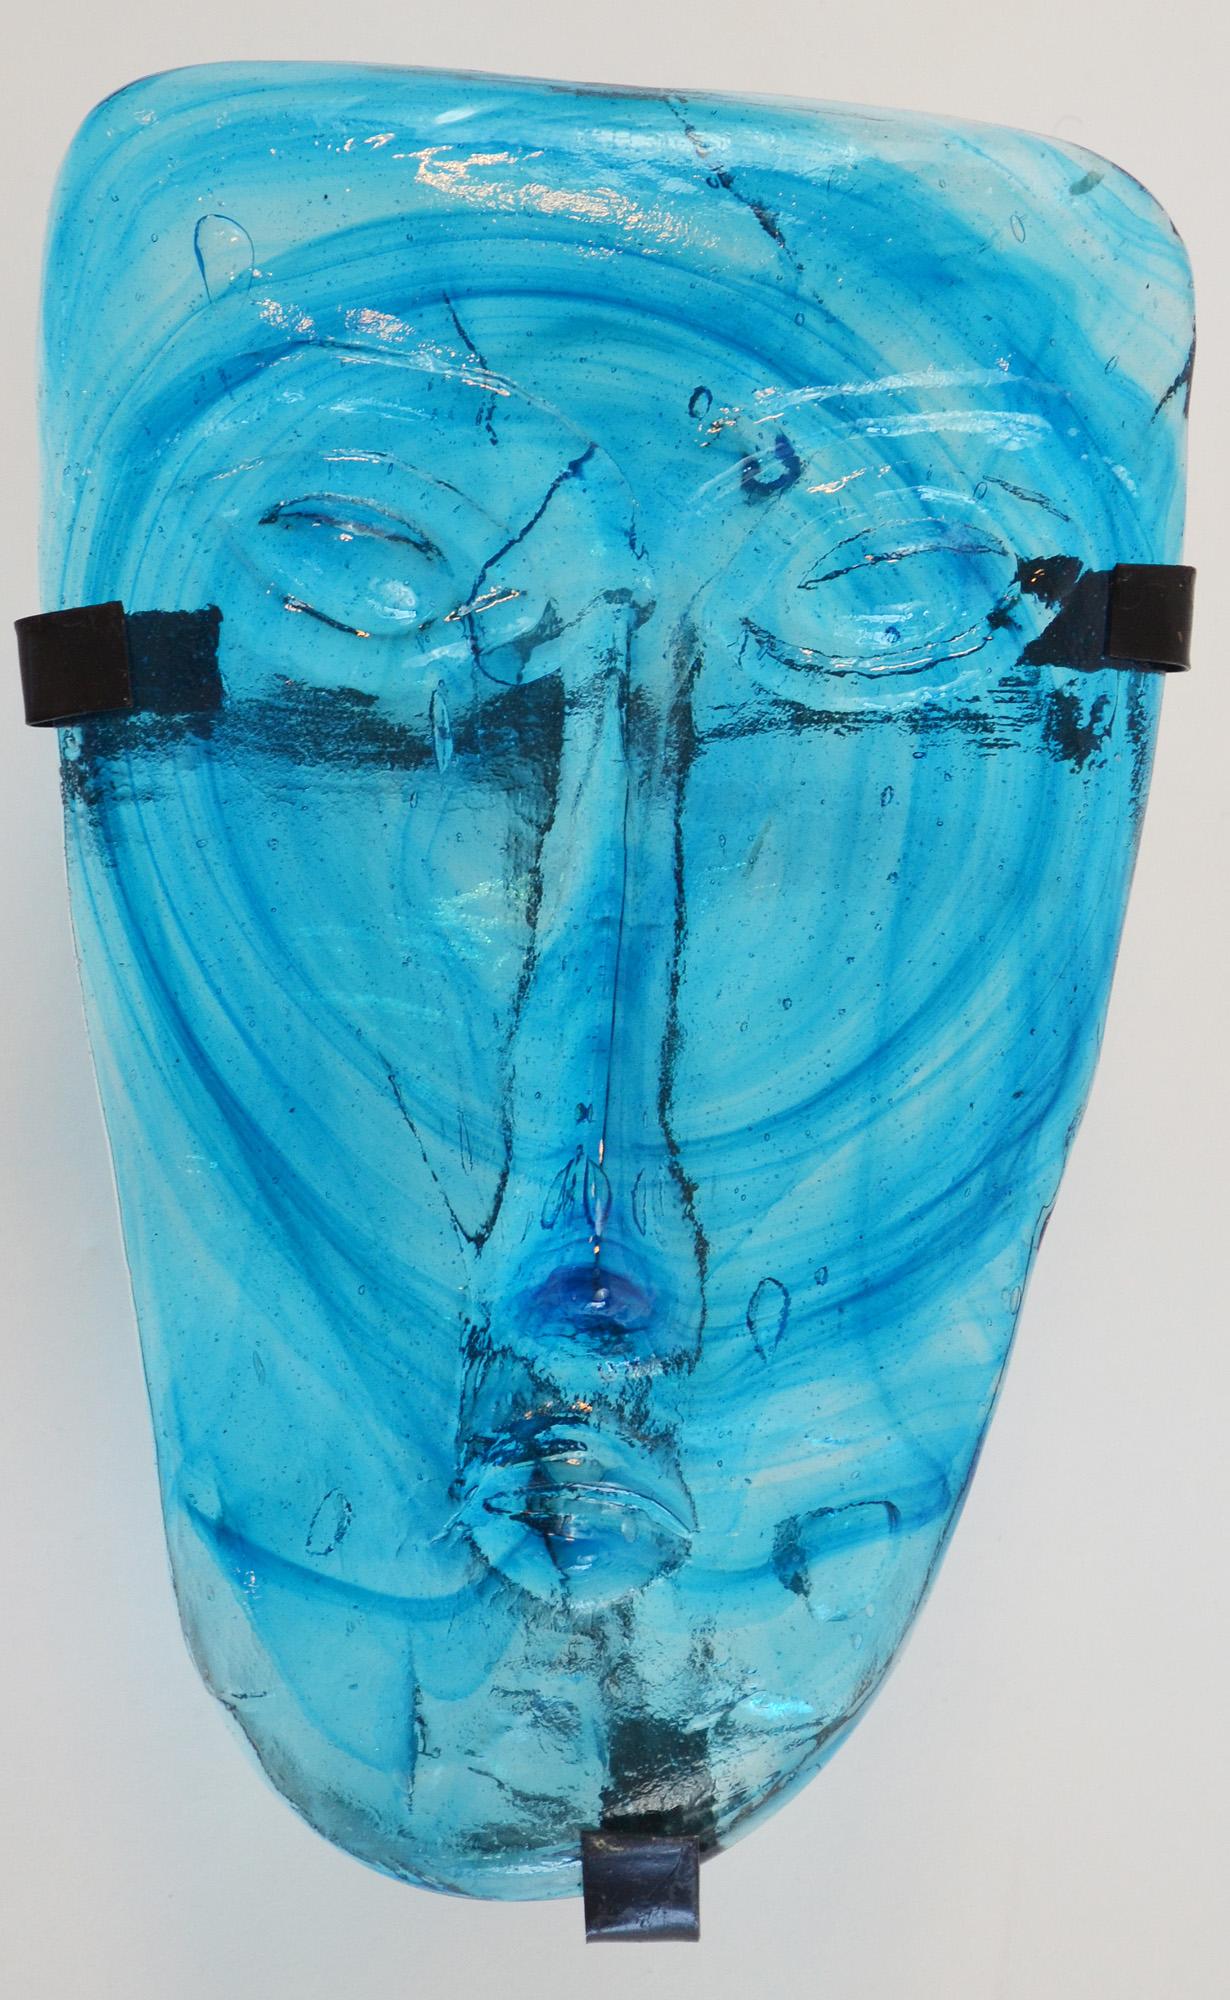 1960s Erik Höglund for Kosta Boda blue art glass face mask wall hanging or candle sconce. Steel frame holds blue glass mask.